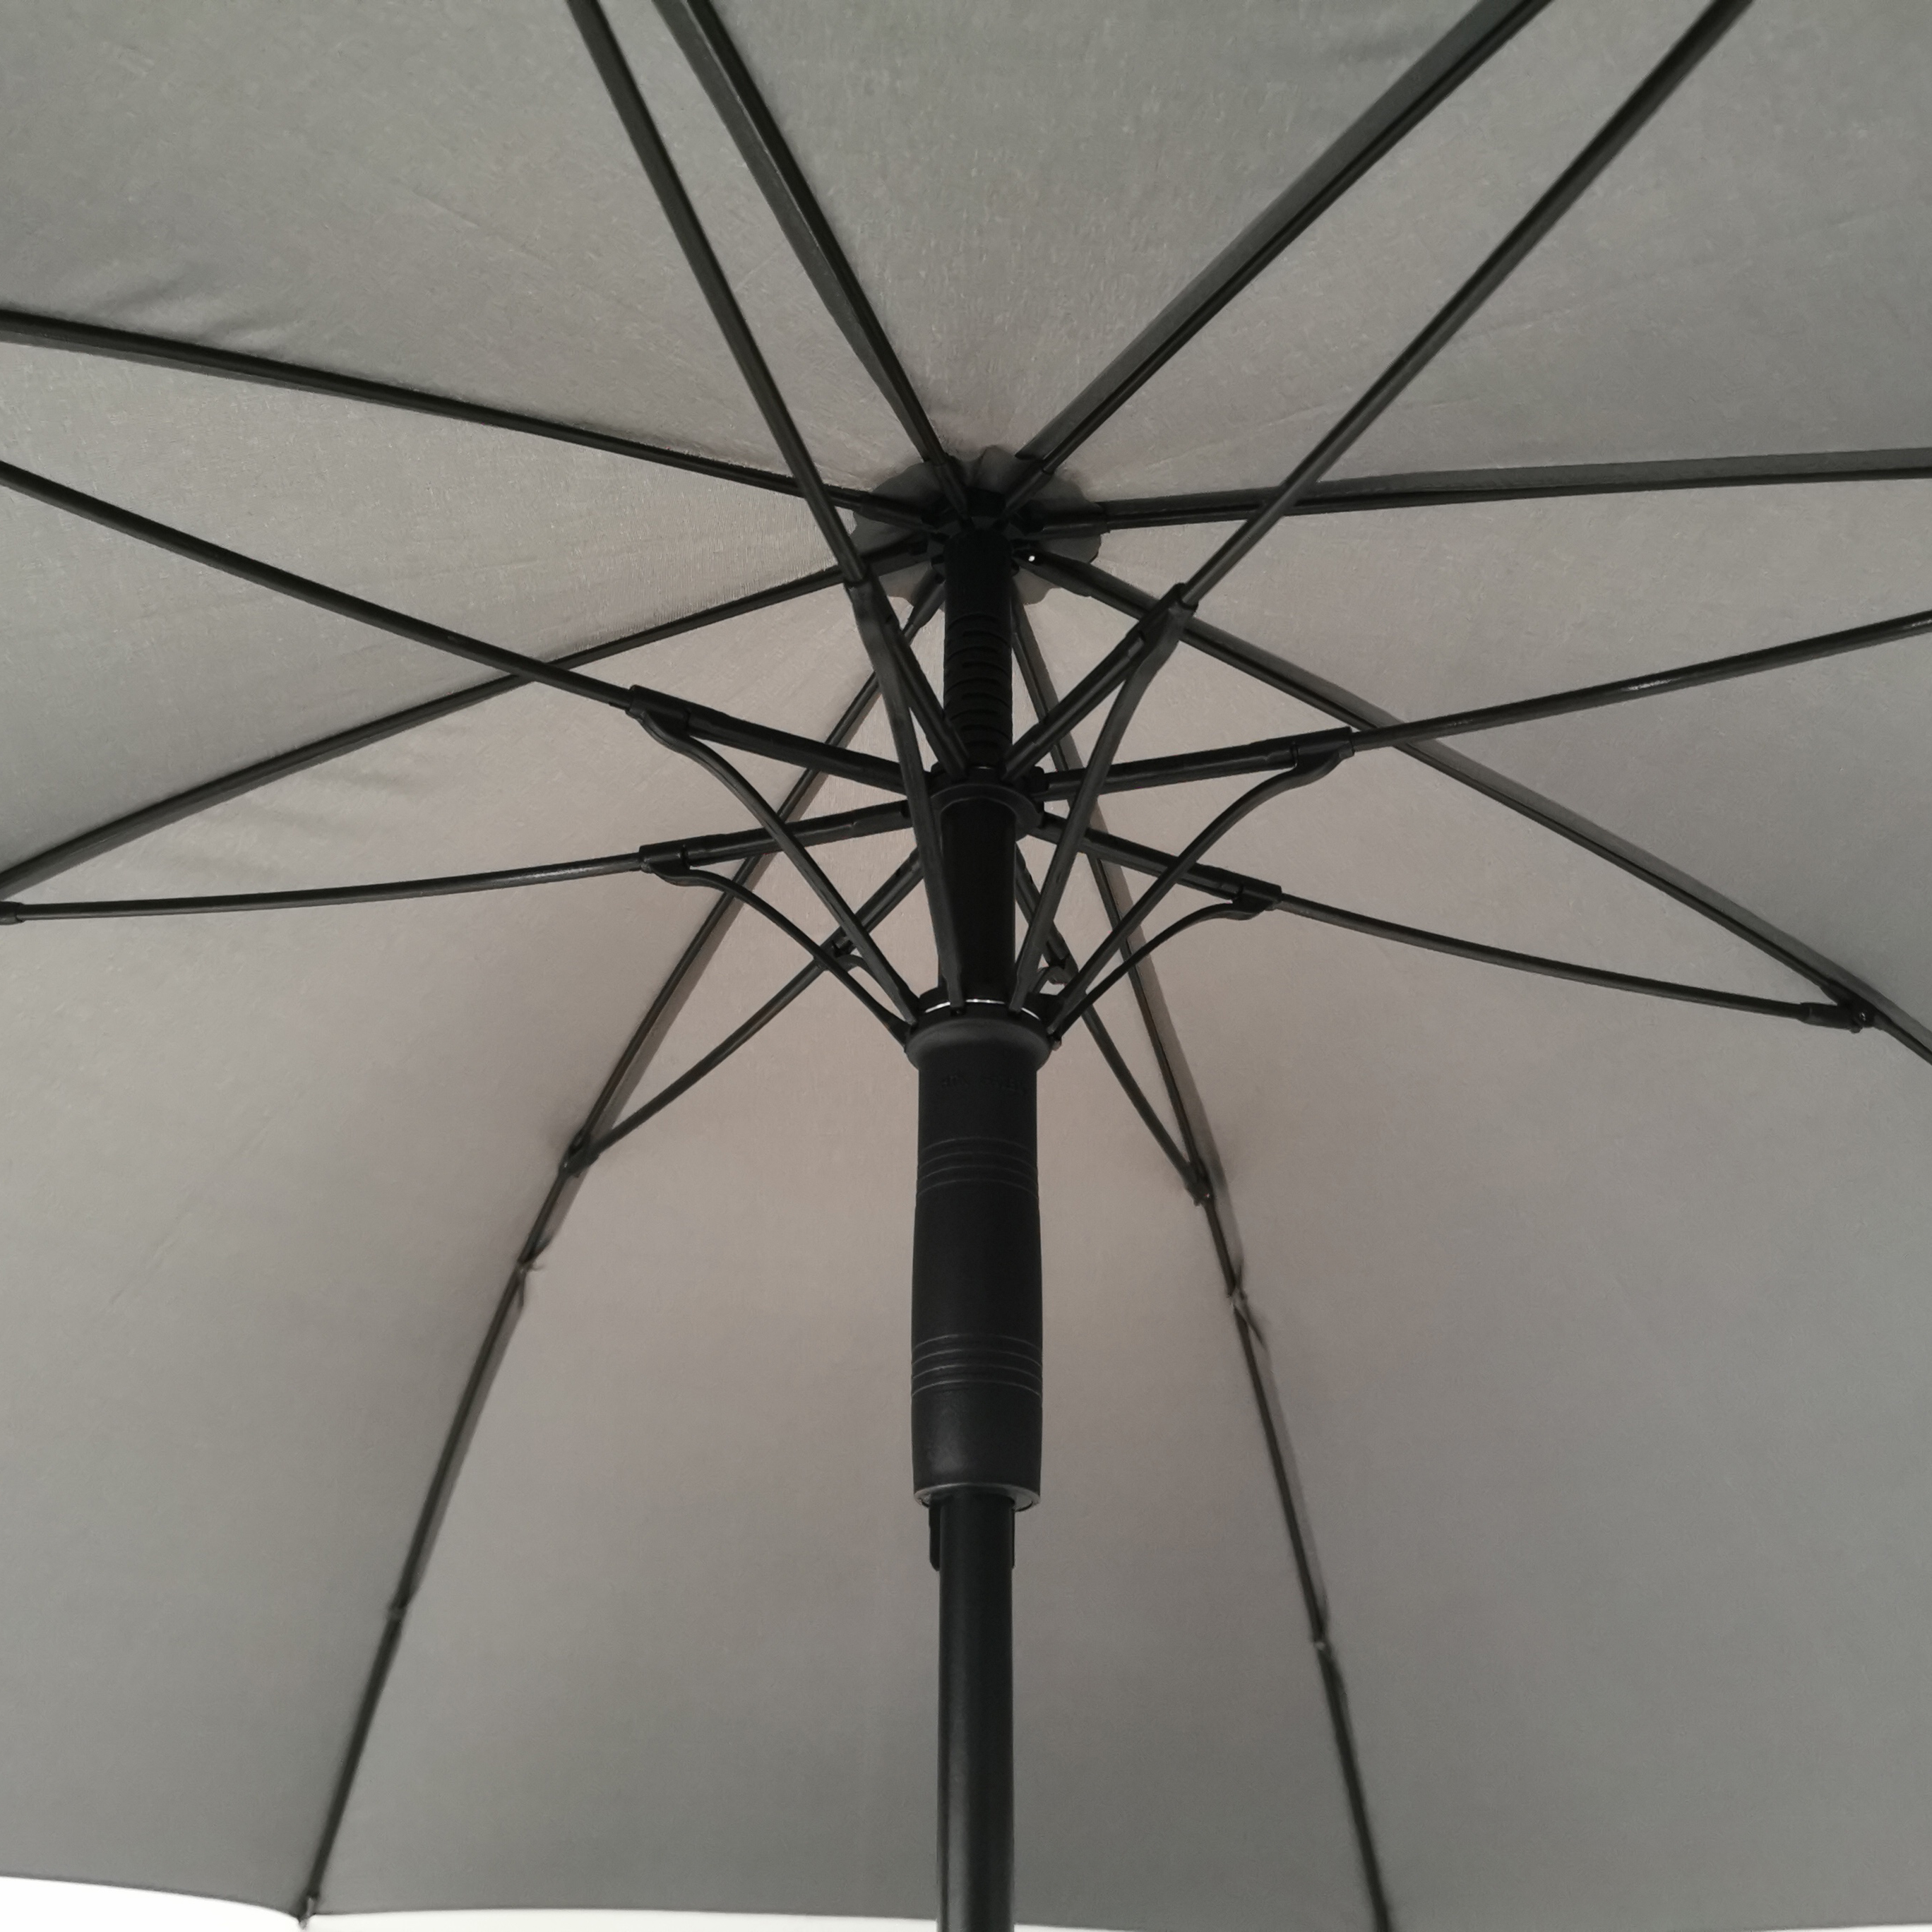 https://www.hodaumbrella.com/premium-quality-arc-54-inch-golf-umbrella-product/